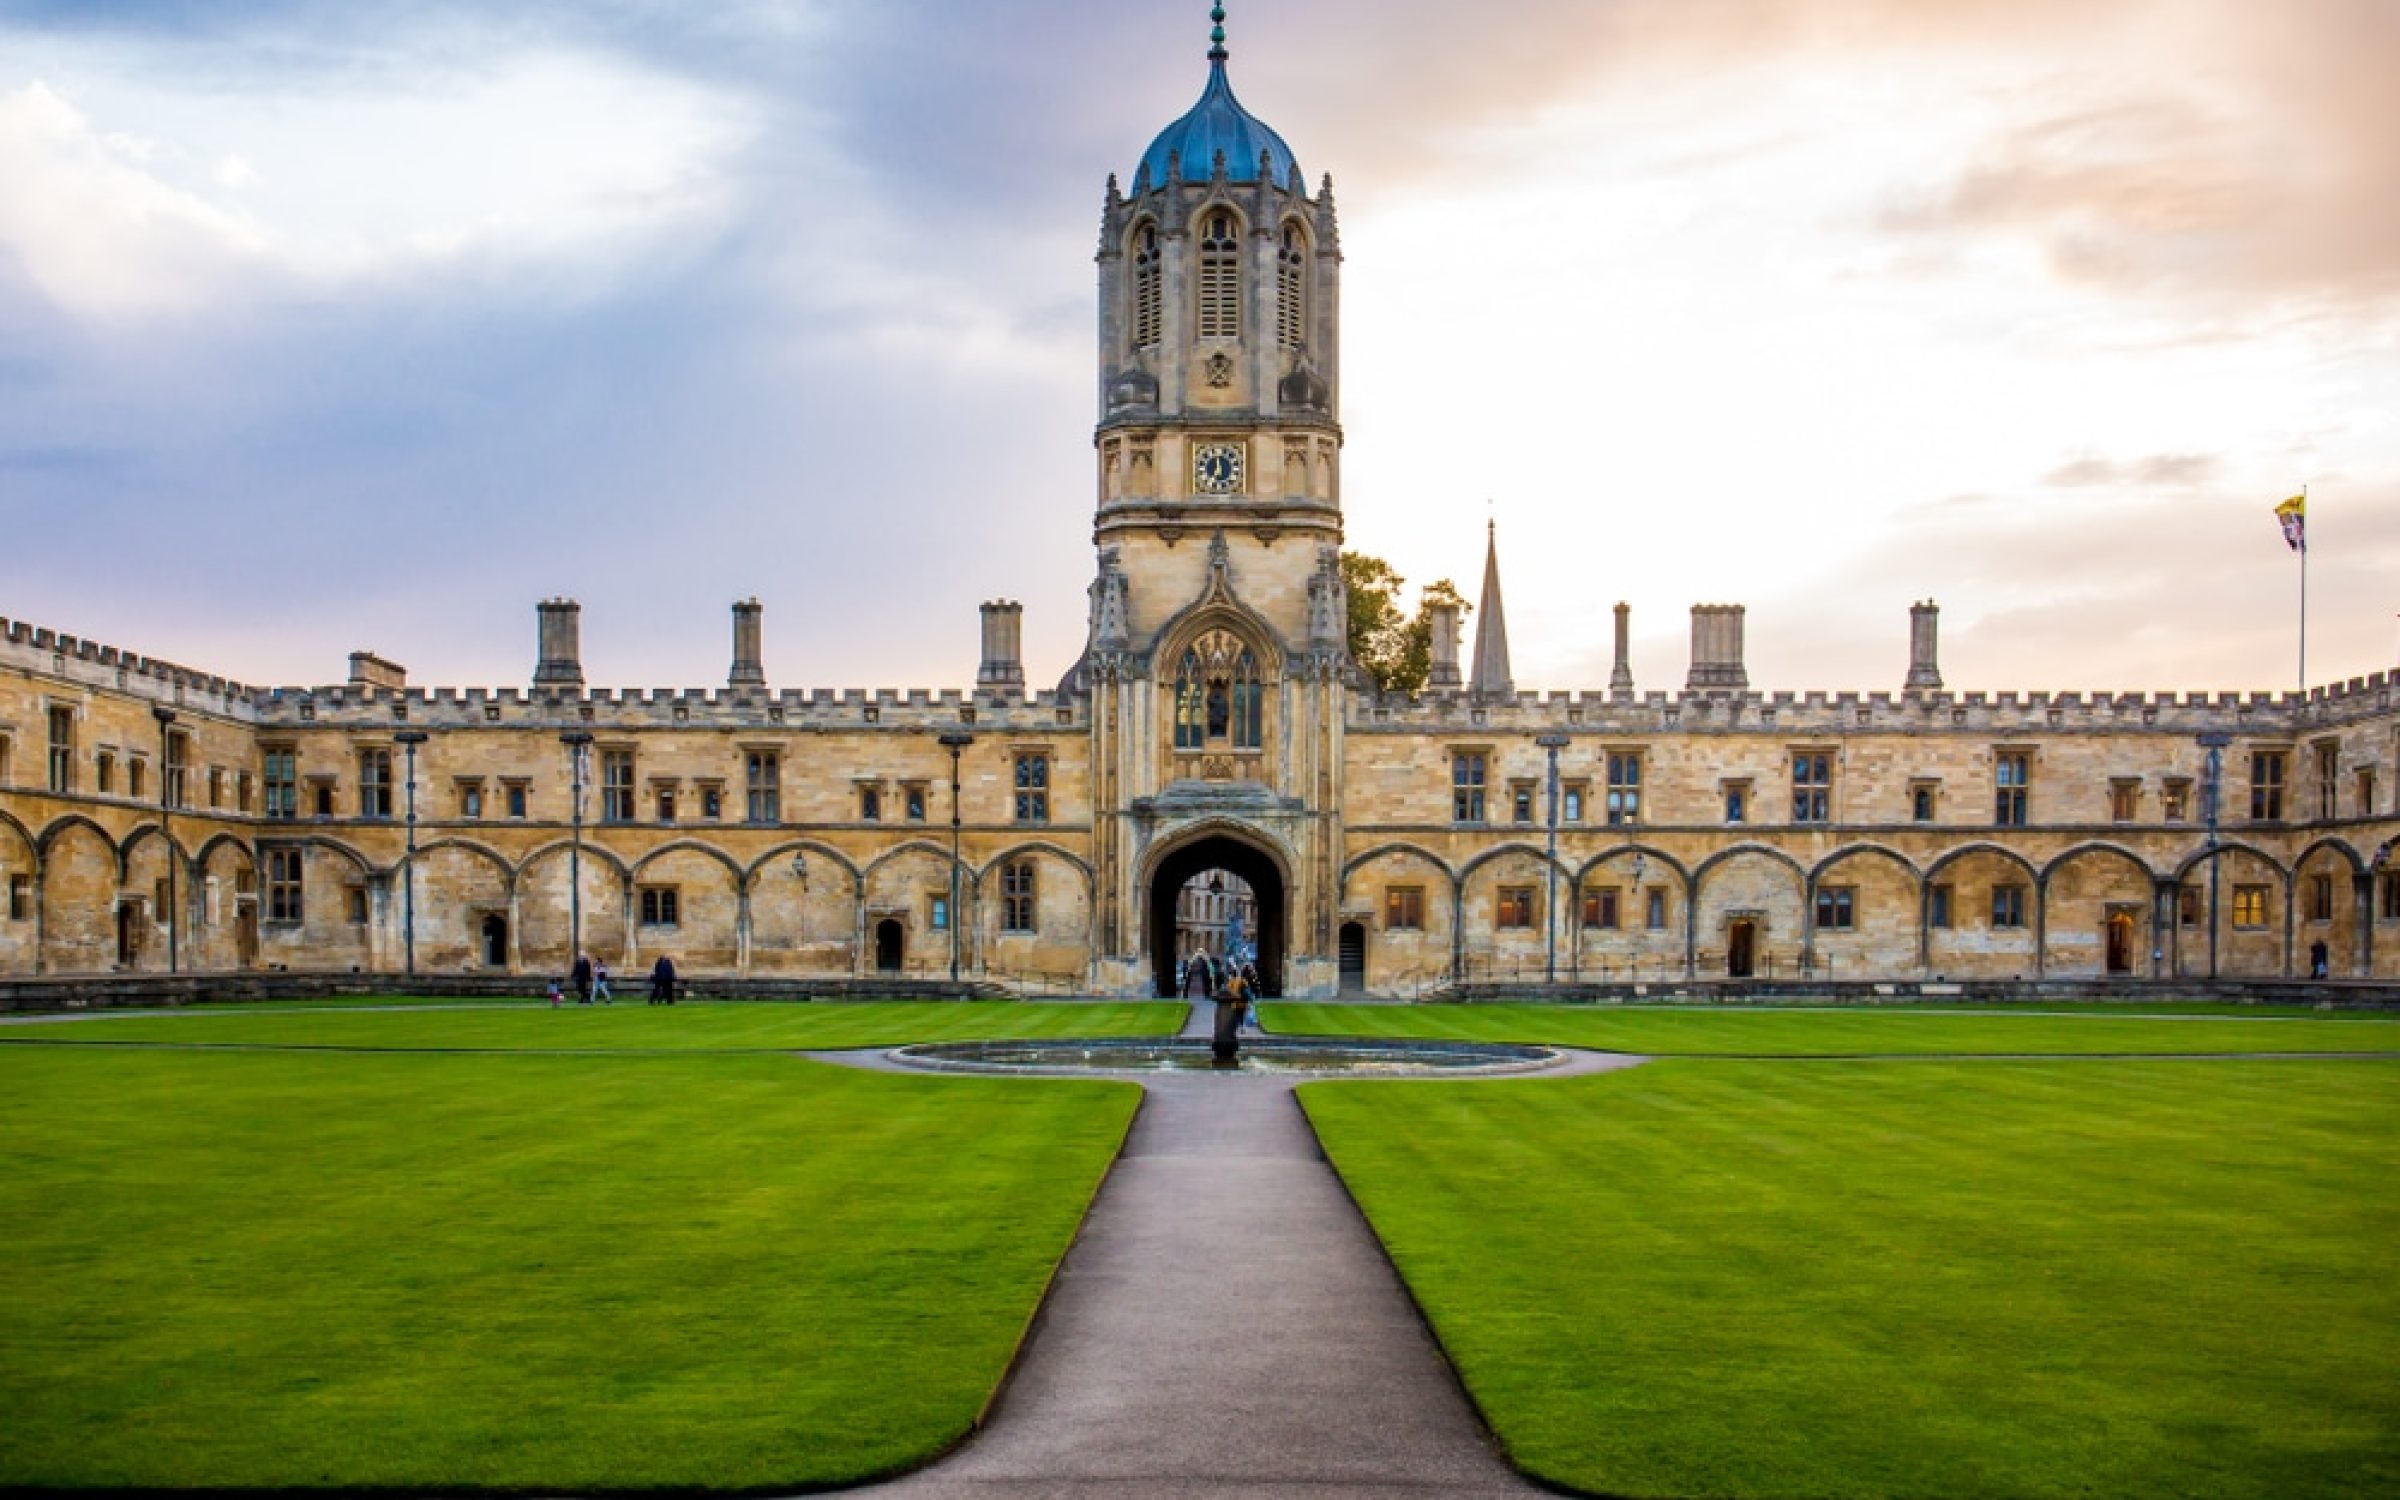 Christ Church College, University of Oxford, UK (via Aeypix/ Shutterstock)